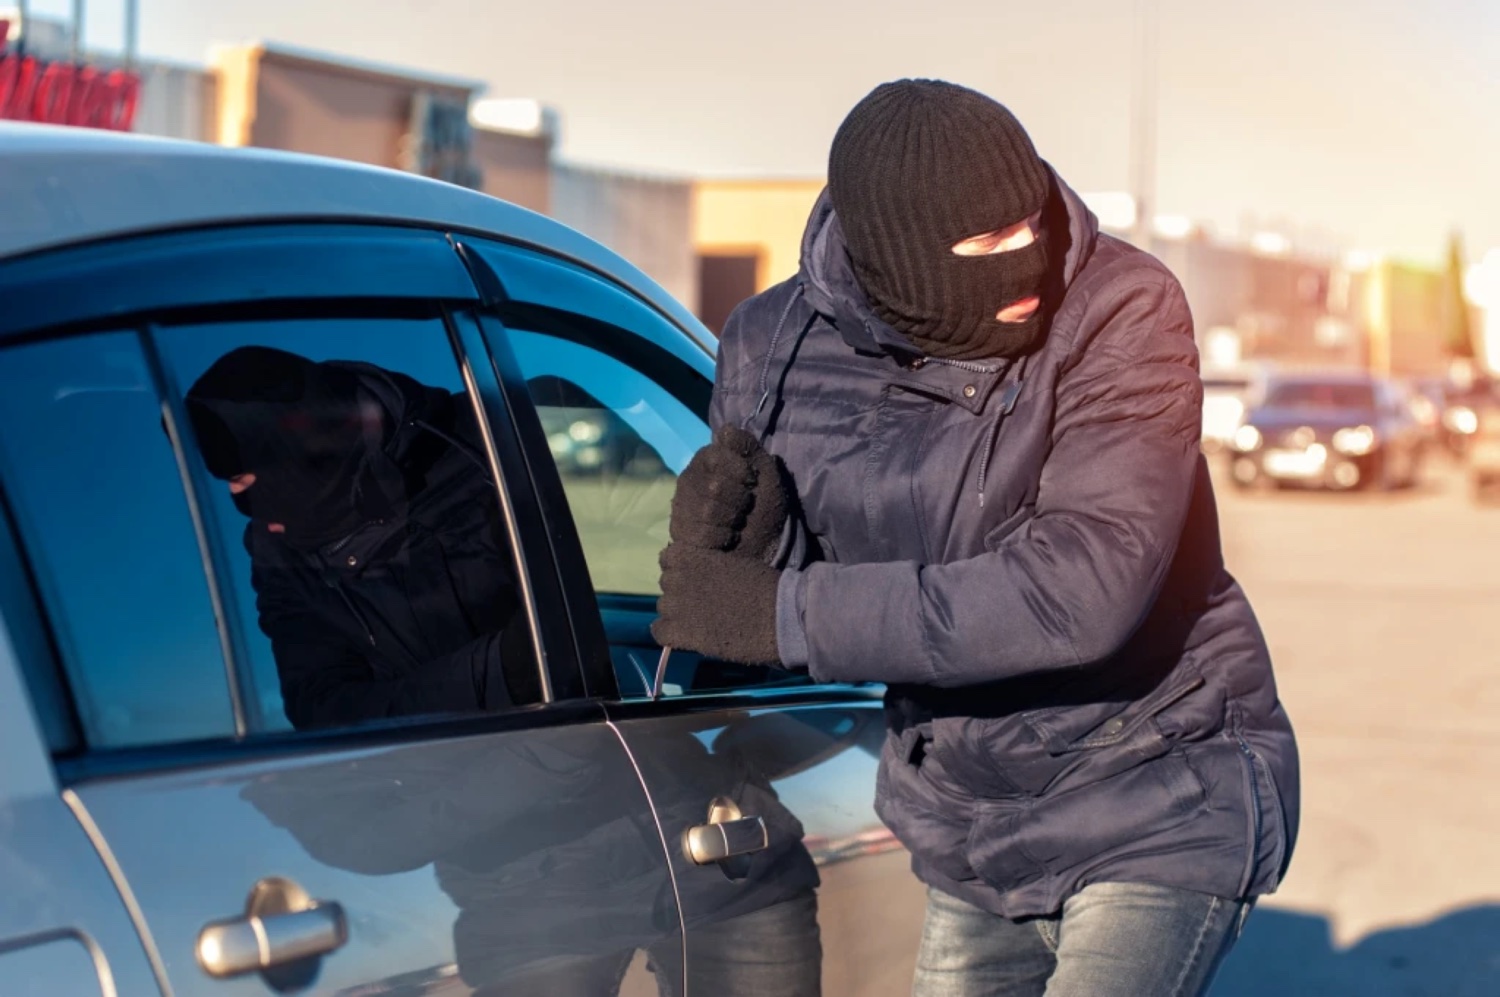 Car-Theft-in-Progress